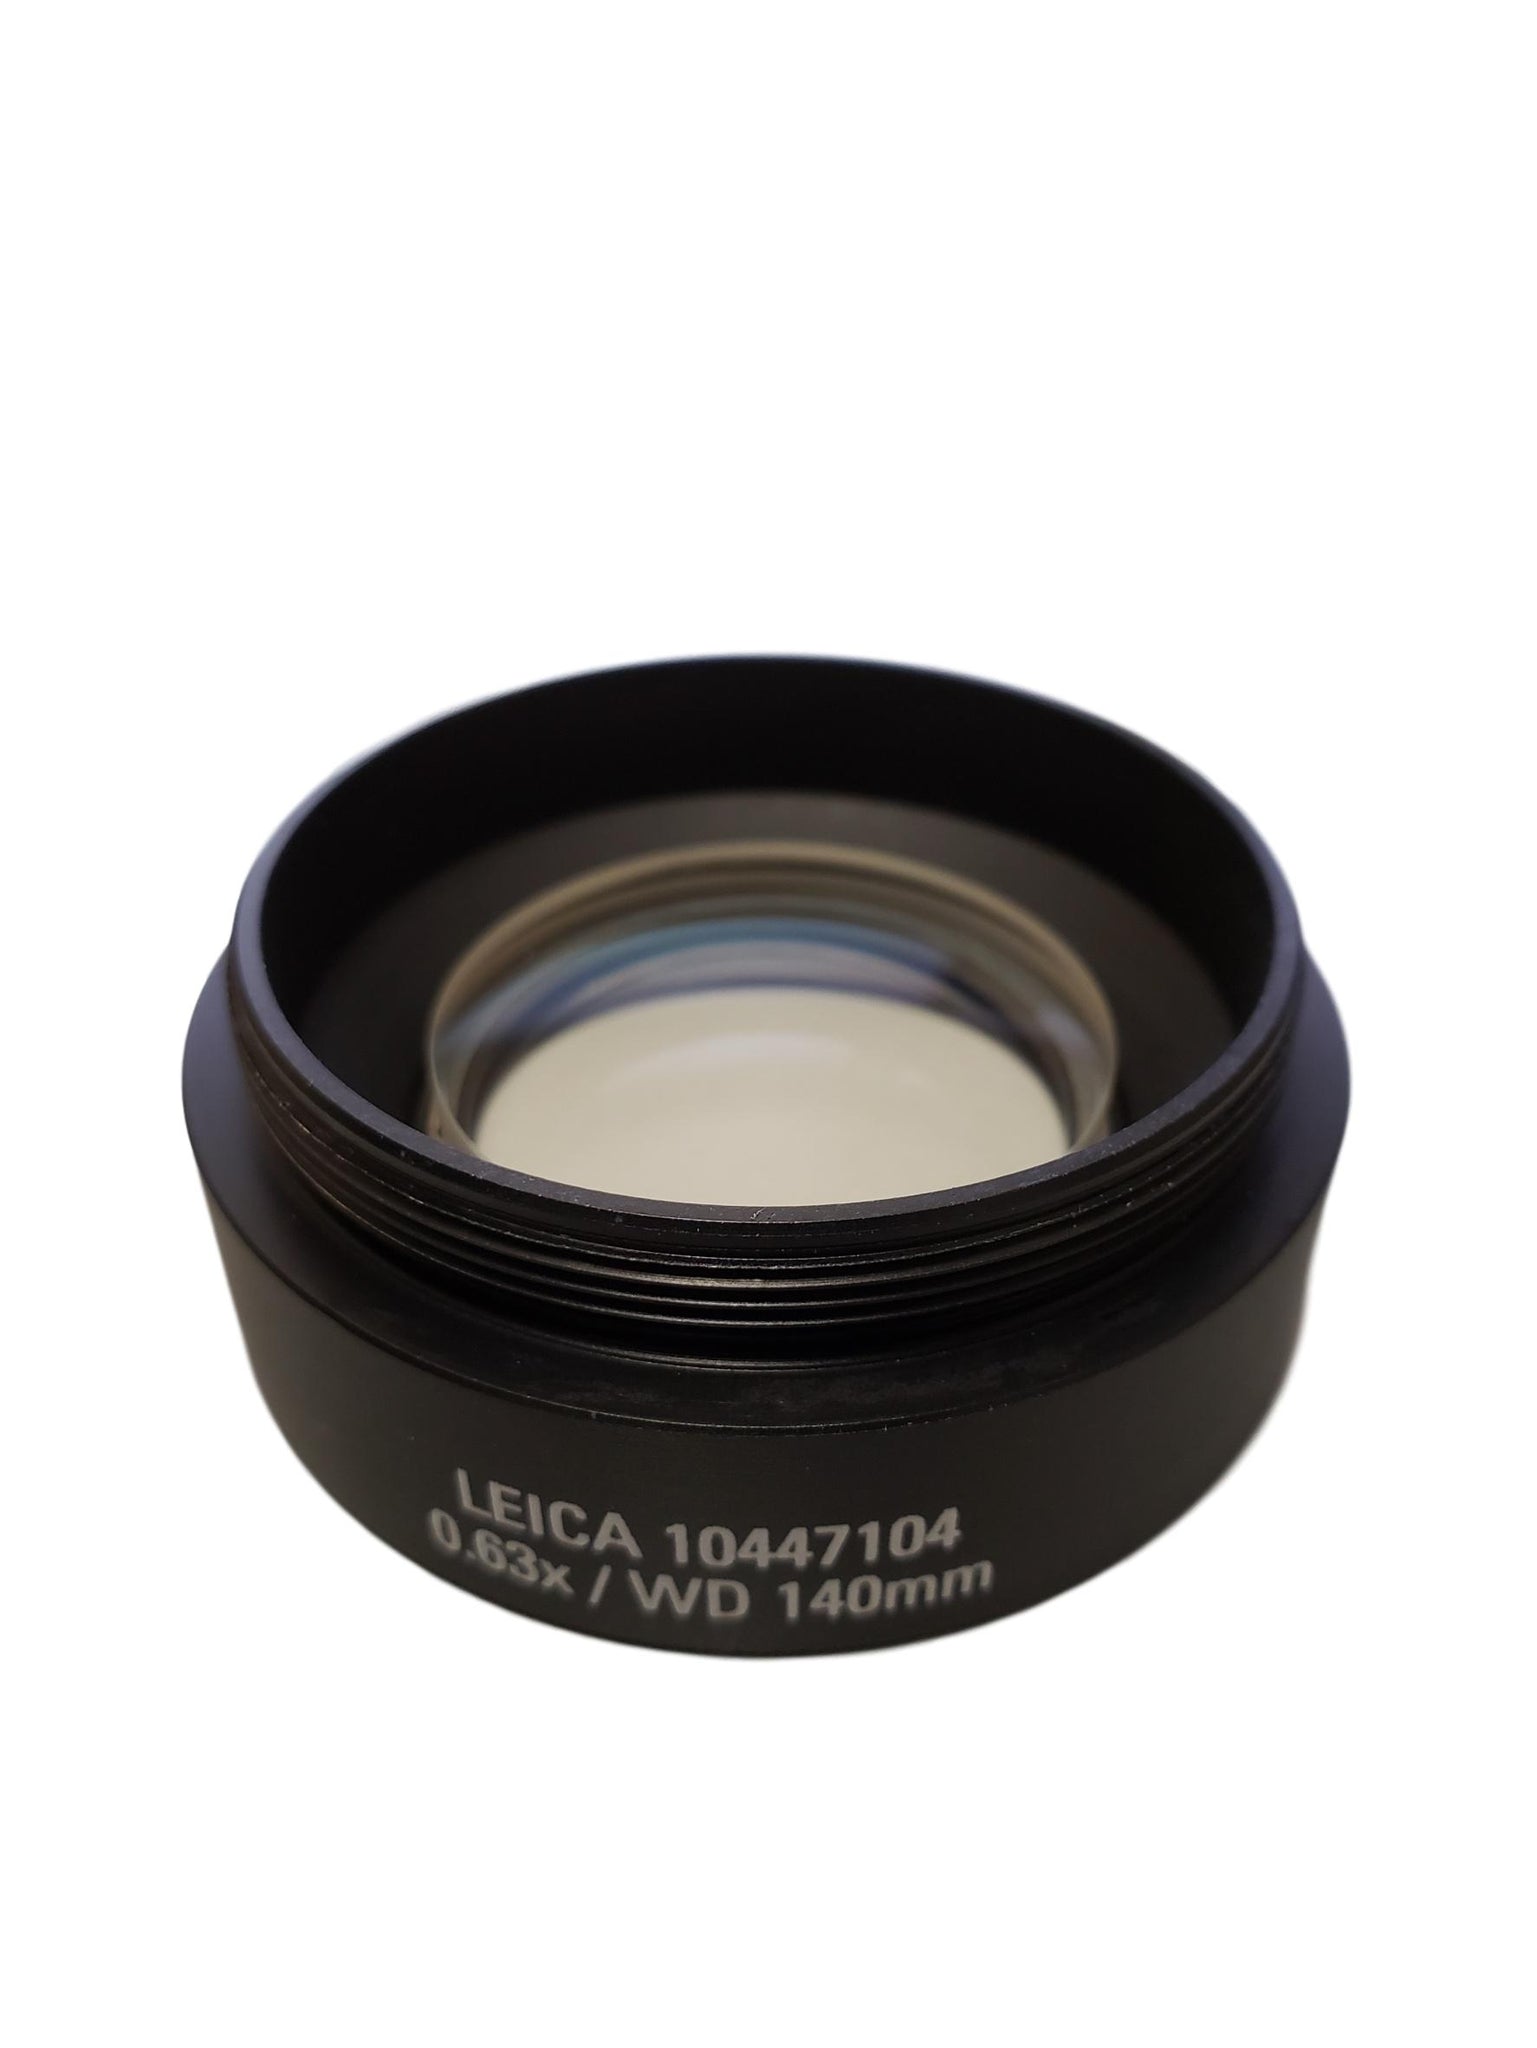 Leica EZ5 0.63x Objective - 10447104